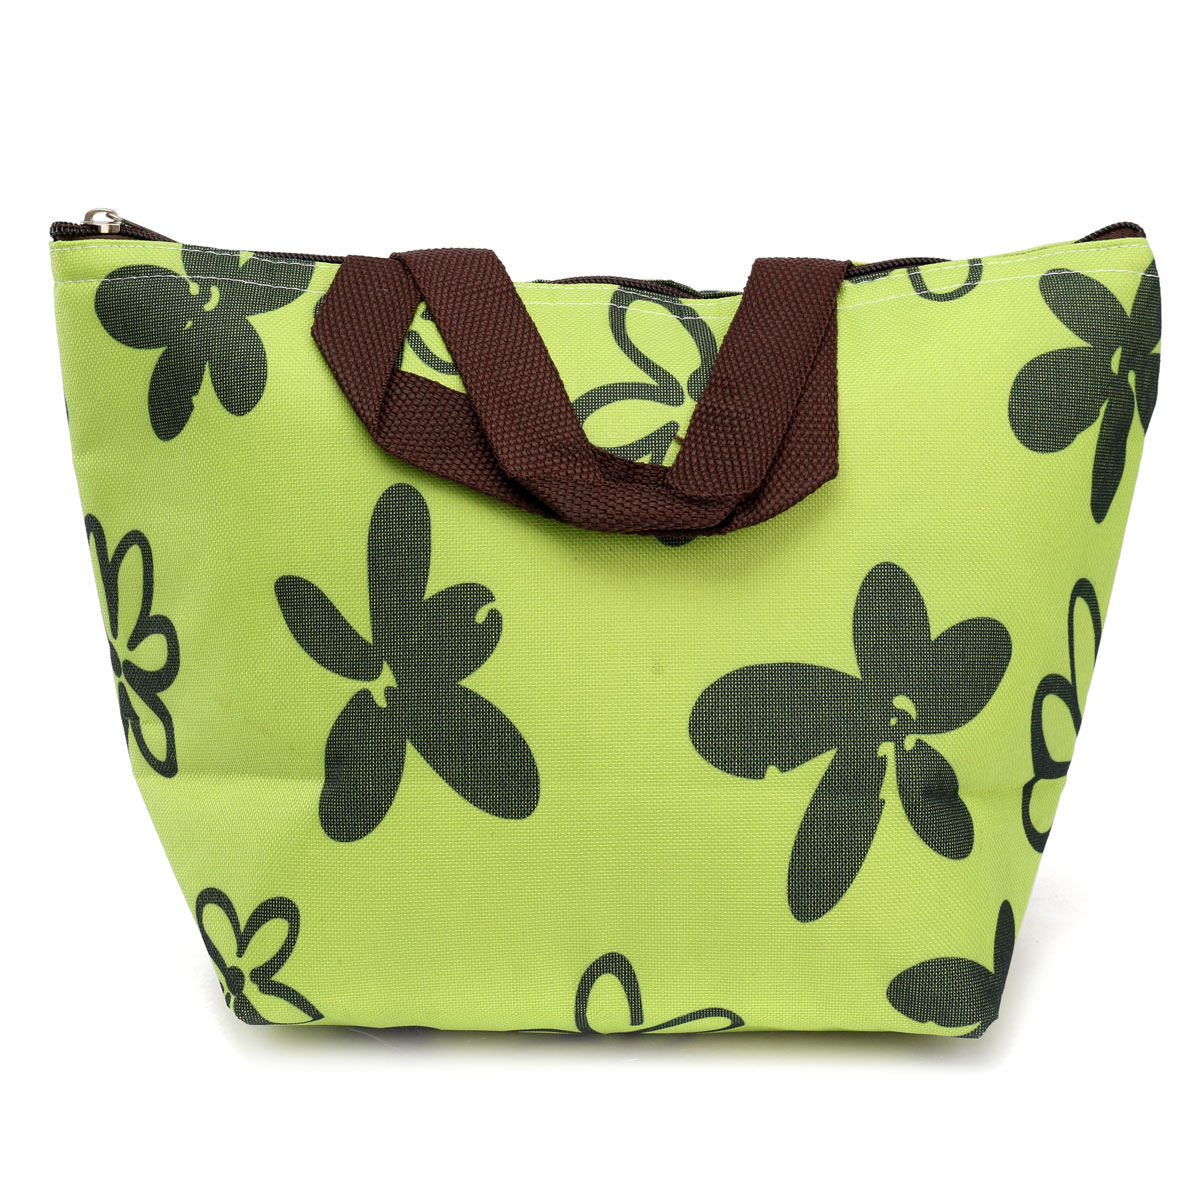 Waterproof Cooler Lunch Picnic Bag Insulated Lunch Handbag